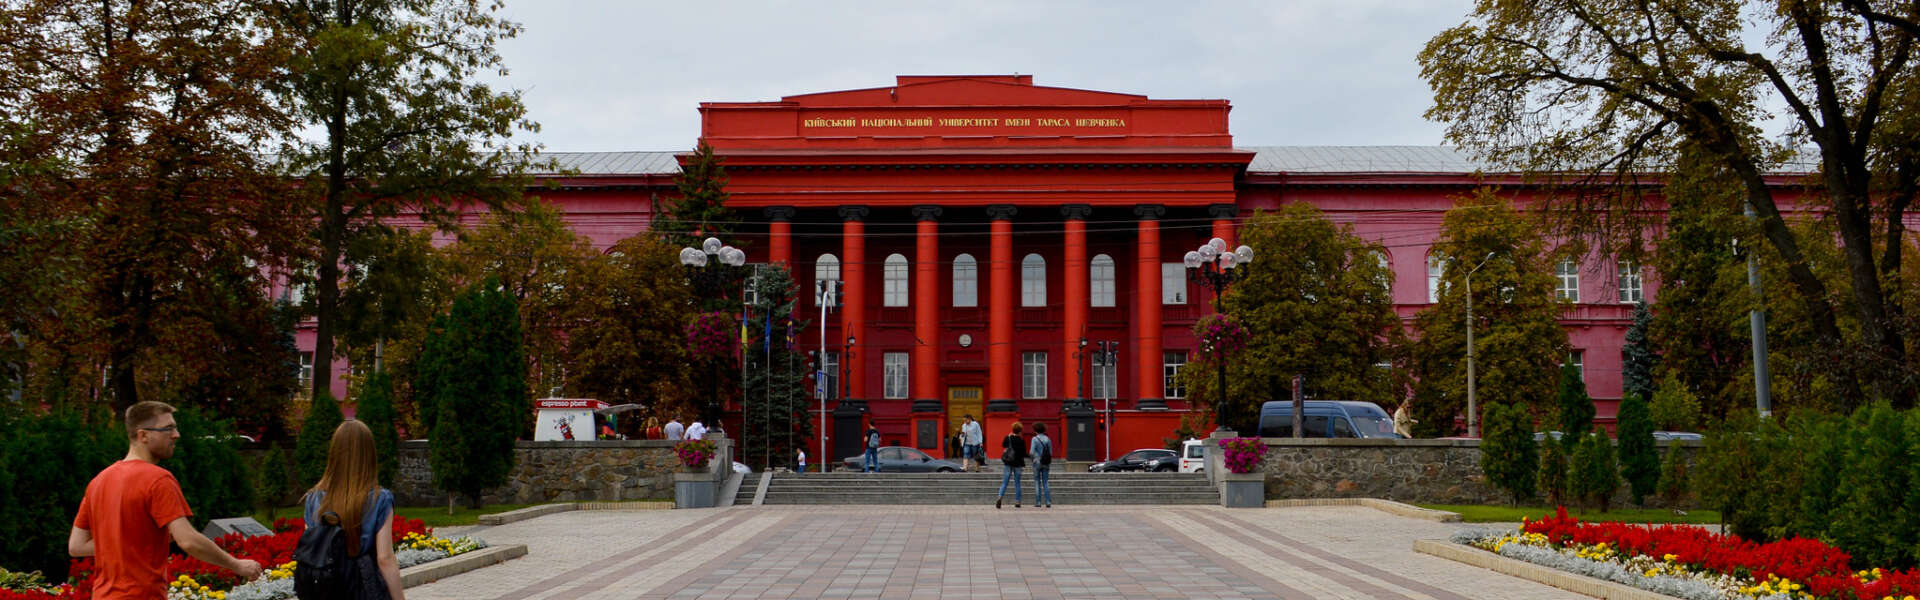 A red building at the Taras Shevchenko National University of Kyiv, Ukraine.